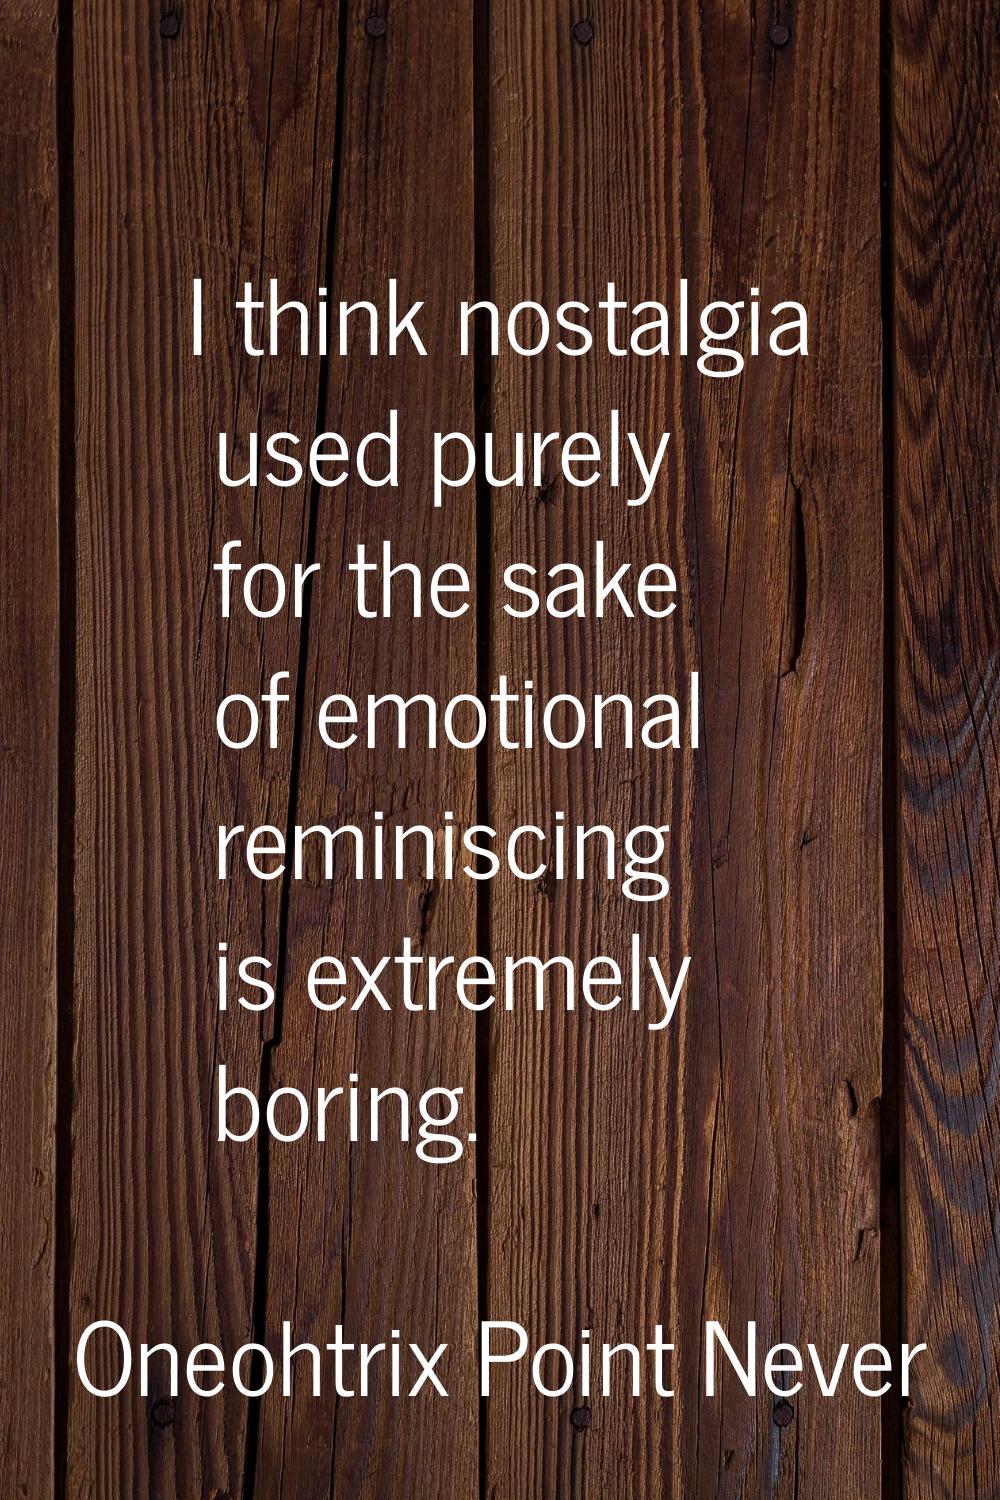 I think nostalgia used purely for the sake of emotional reminiscing is extremely boring.